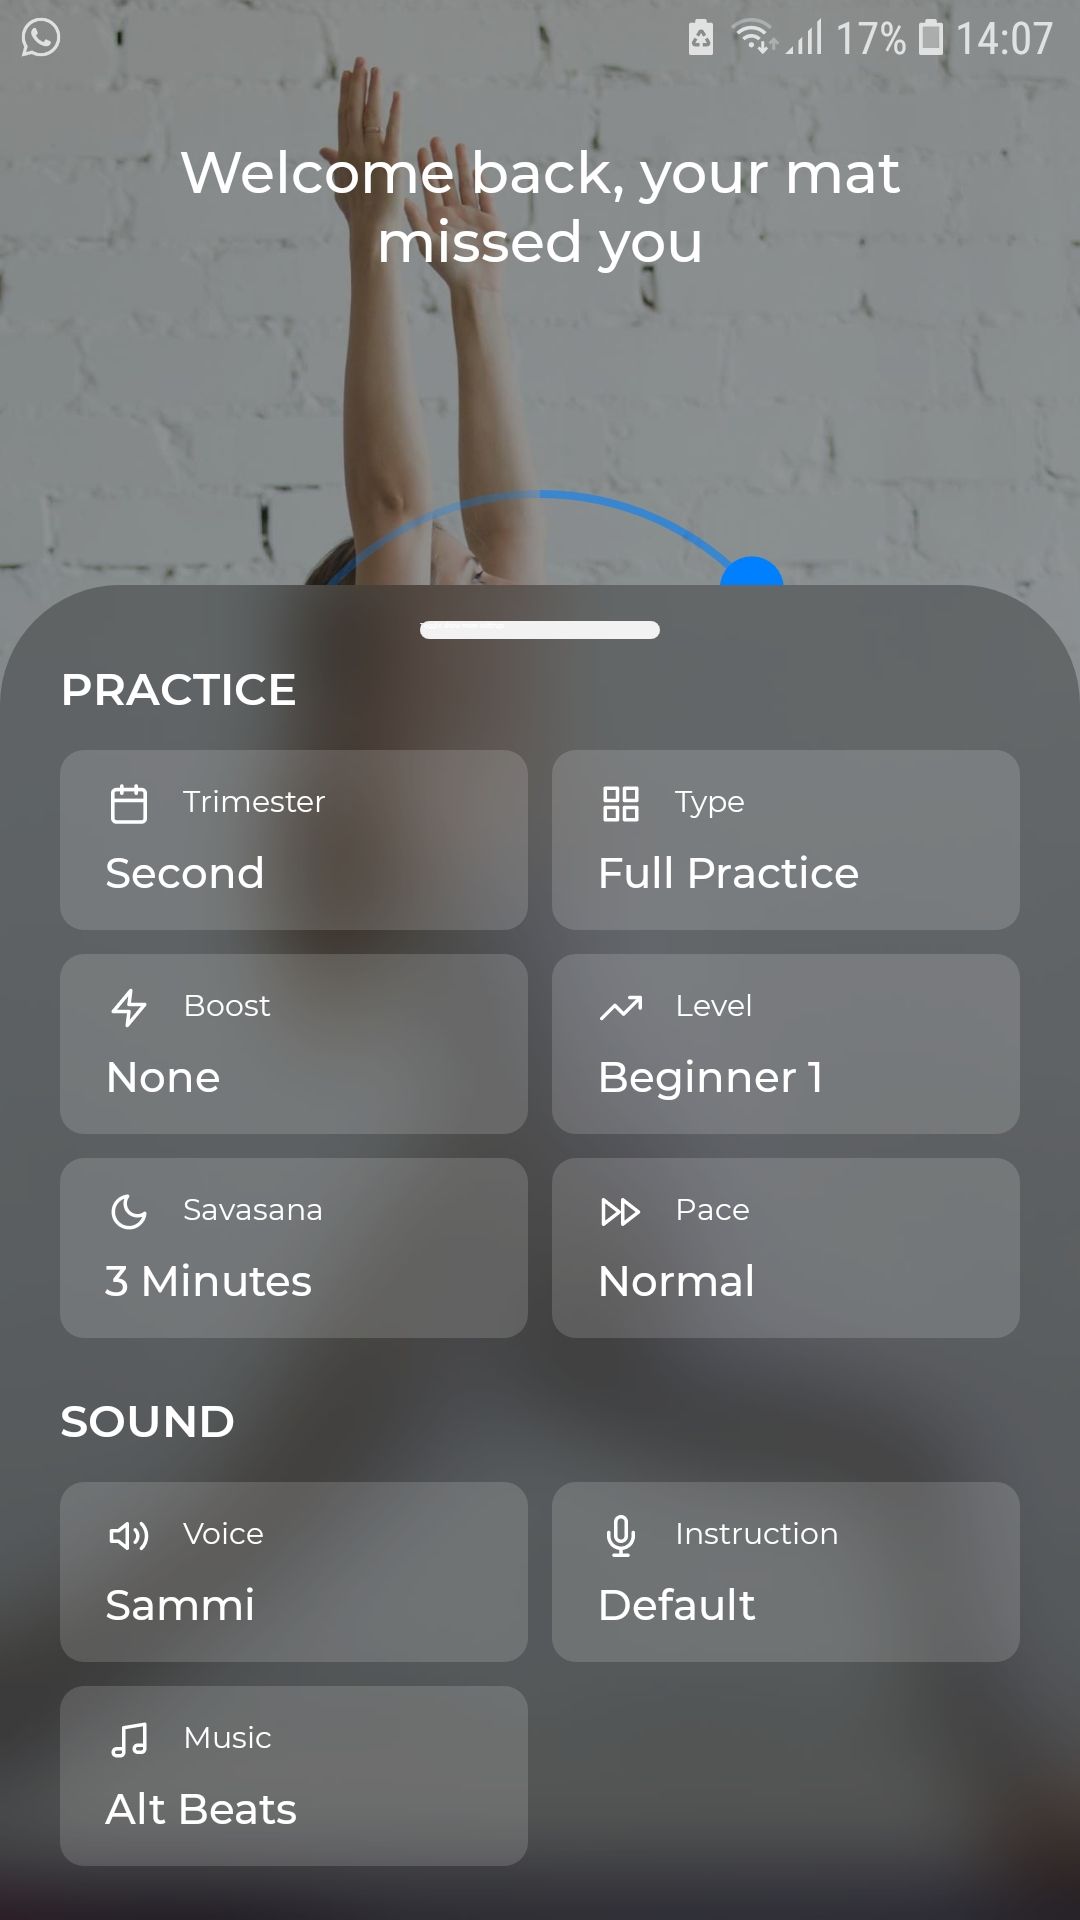 Down Dog Prenatal yoga practice mobile workout app